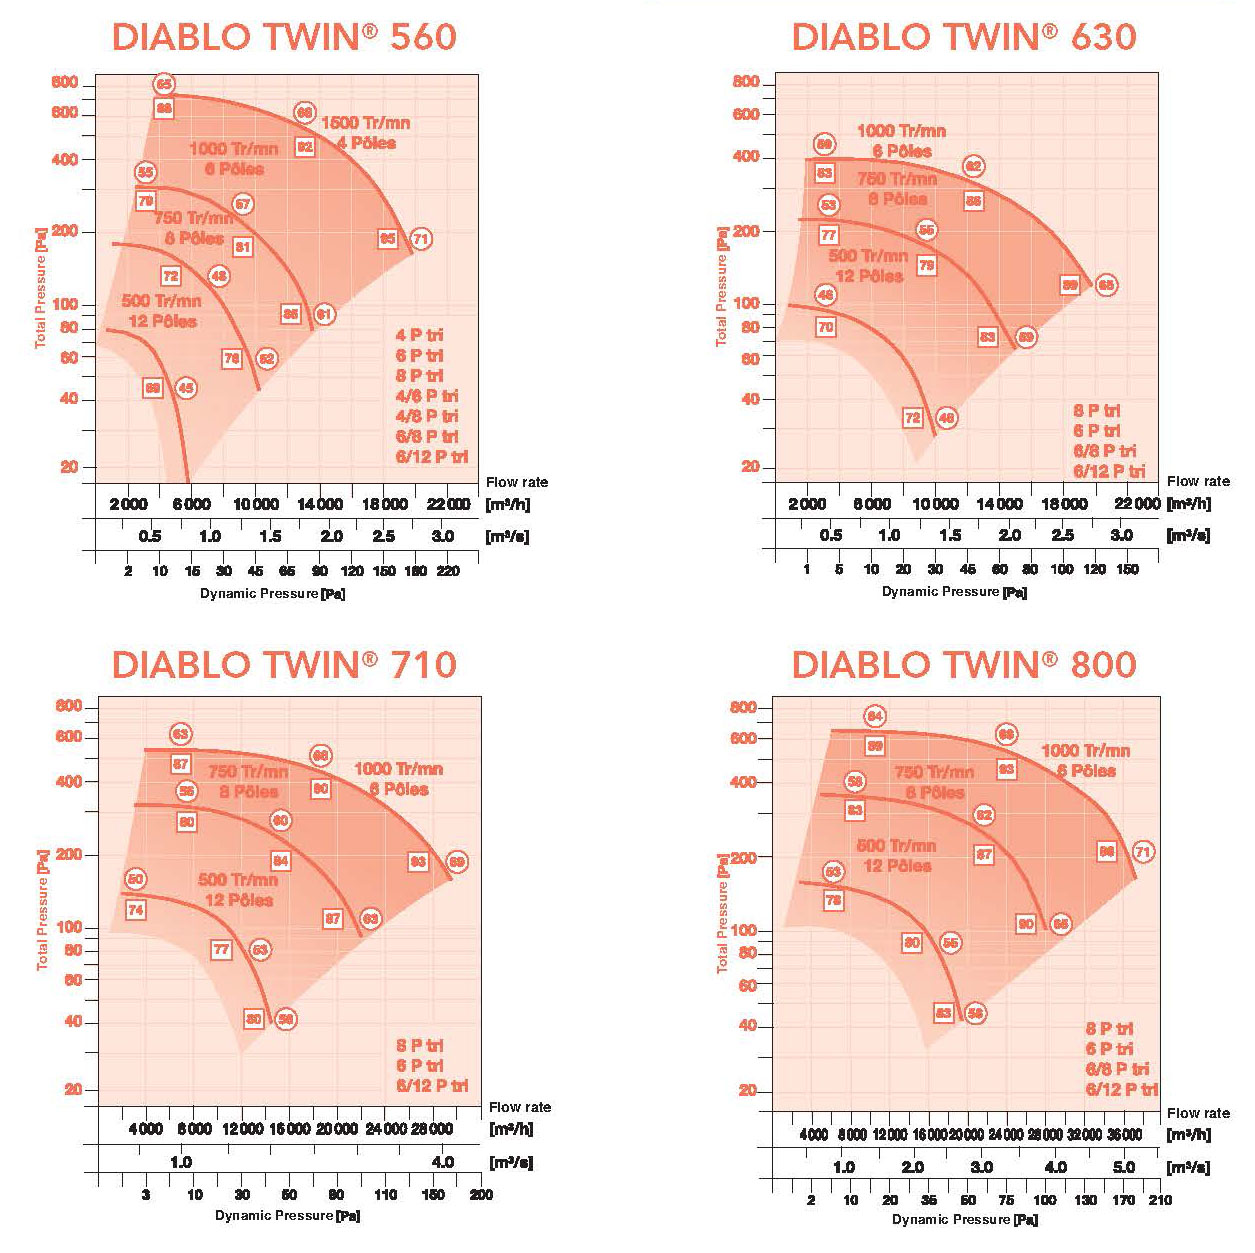 Caladair Diablo Twin Air Flow Rates 